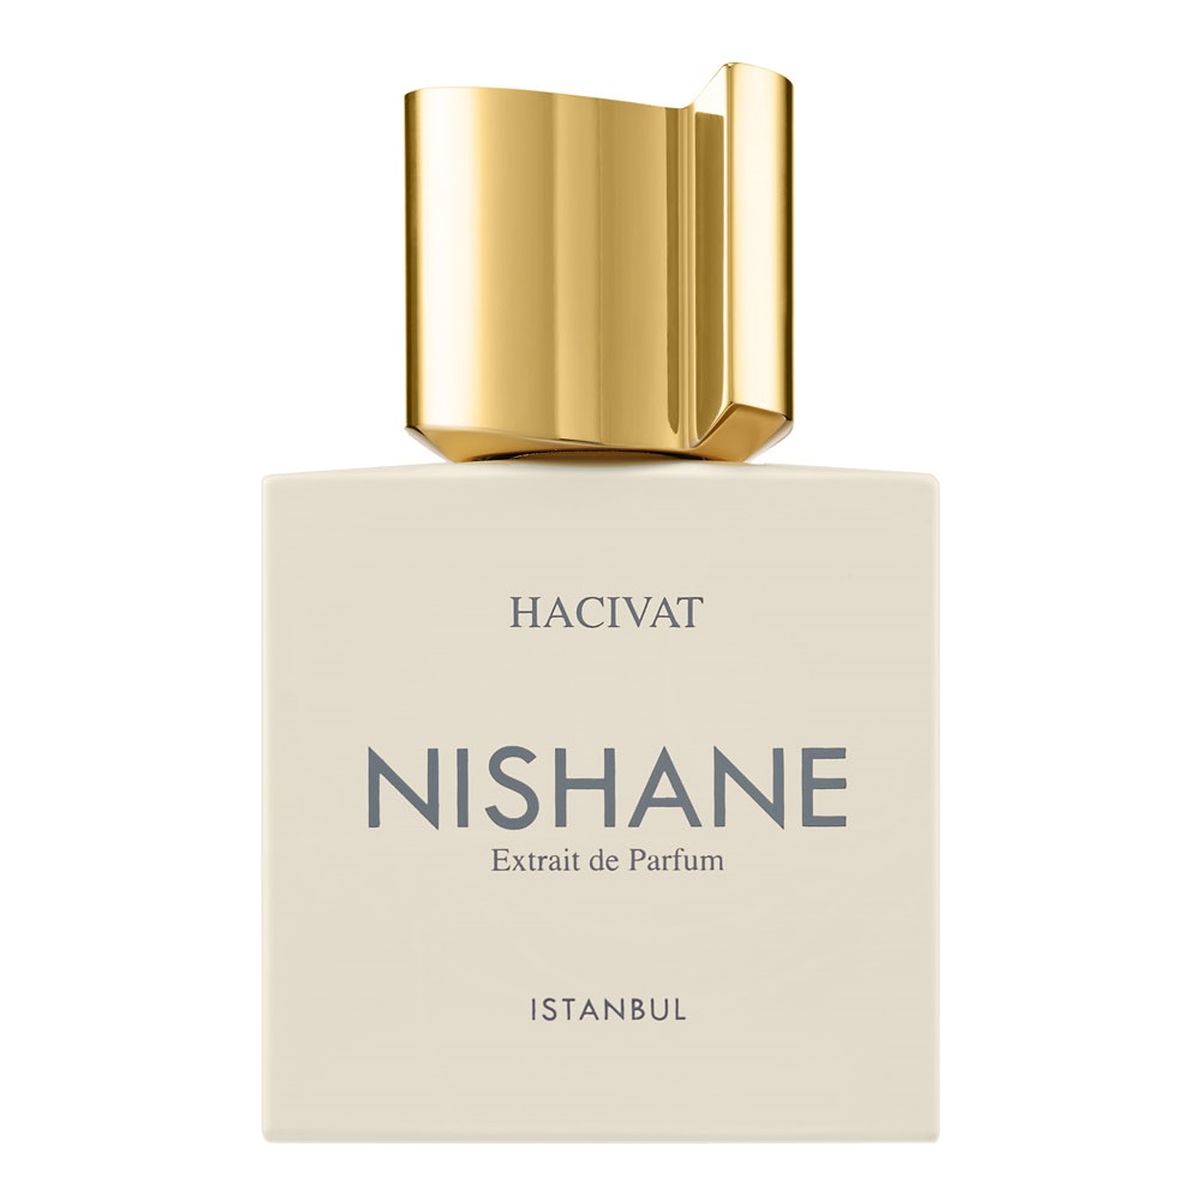 Nishane Hacivat ekstrakt perfum spray tester 50ml